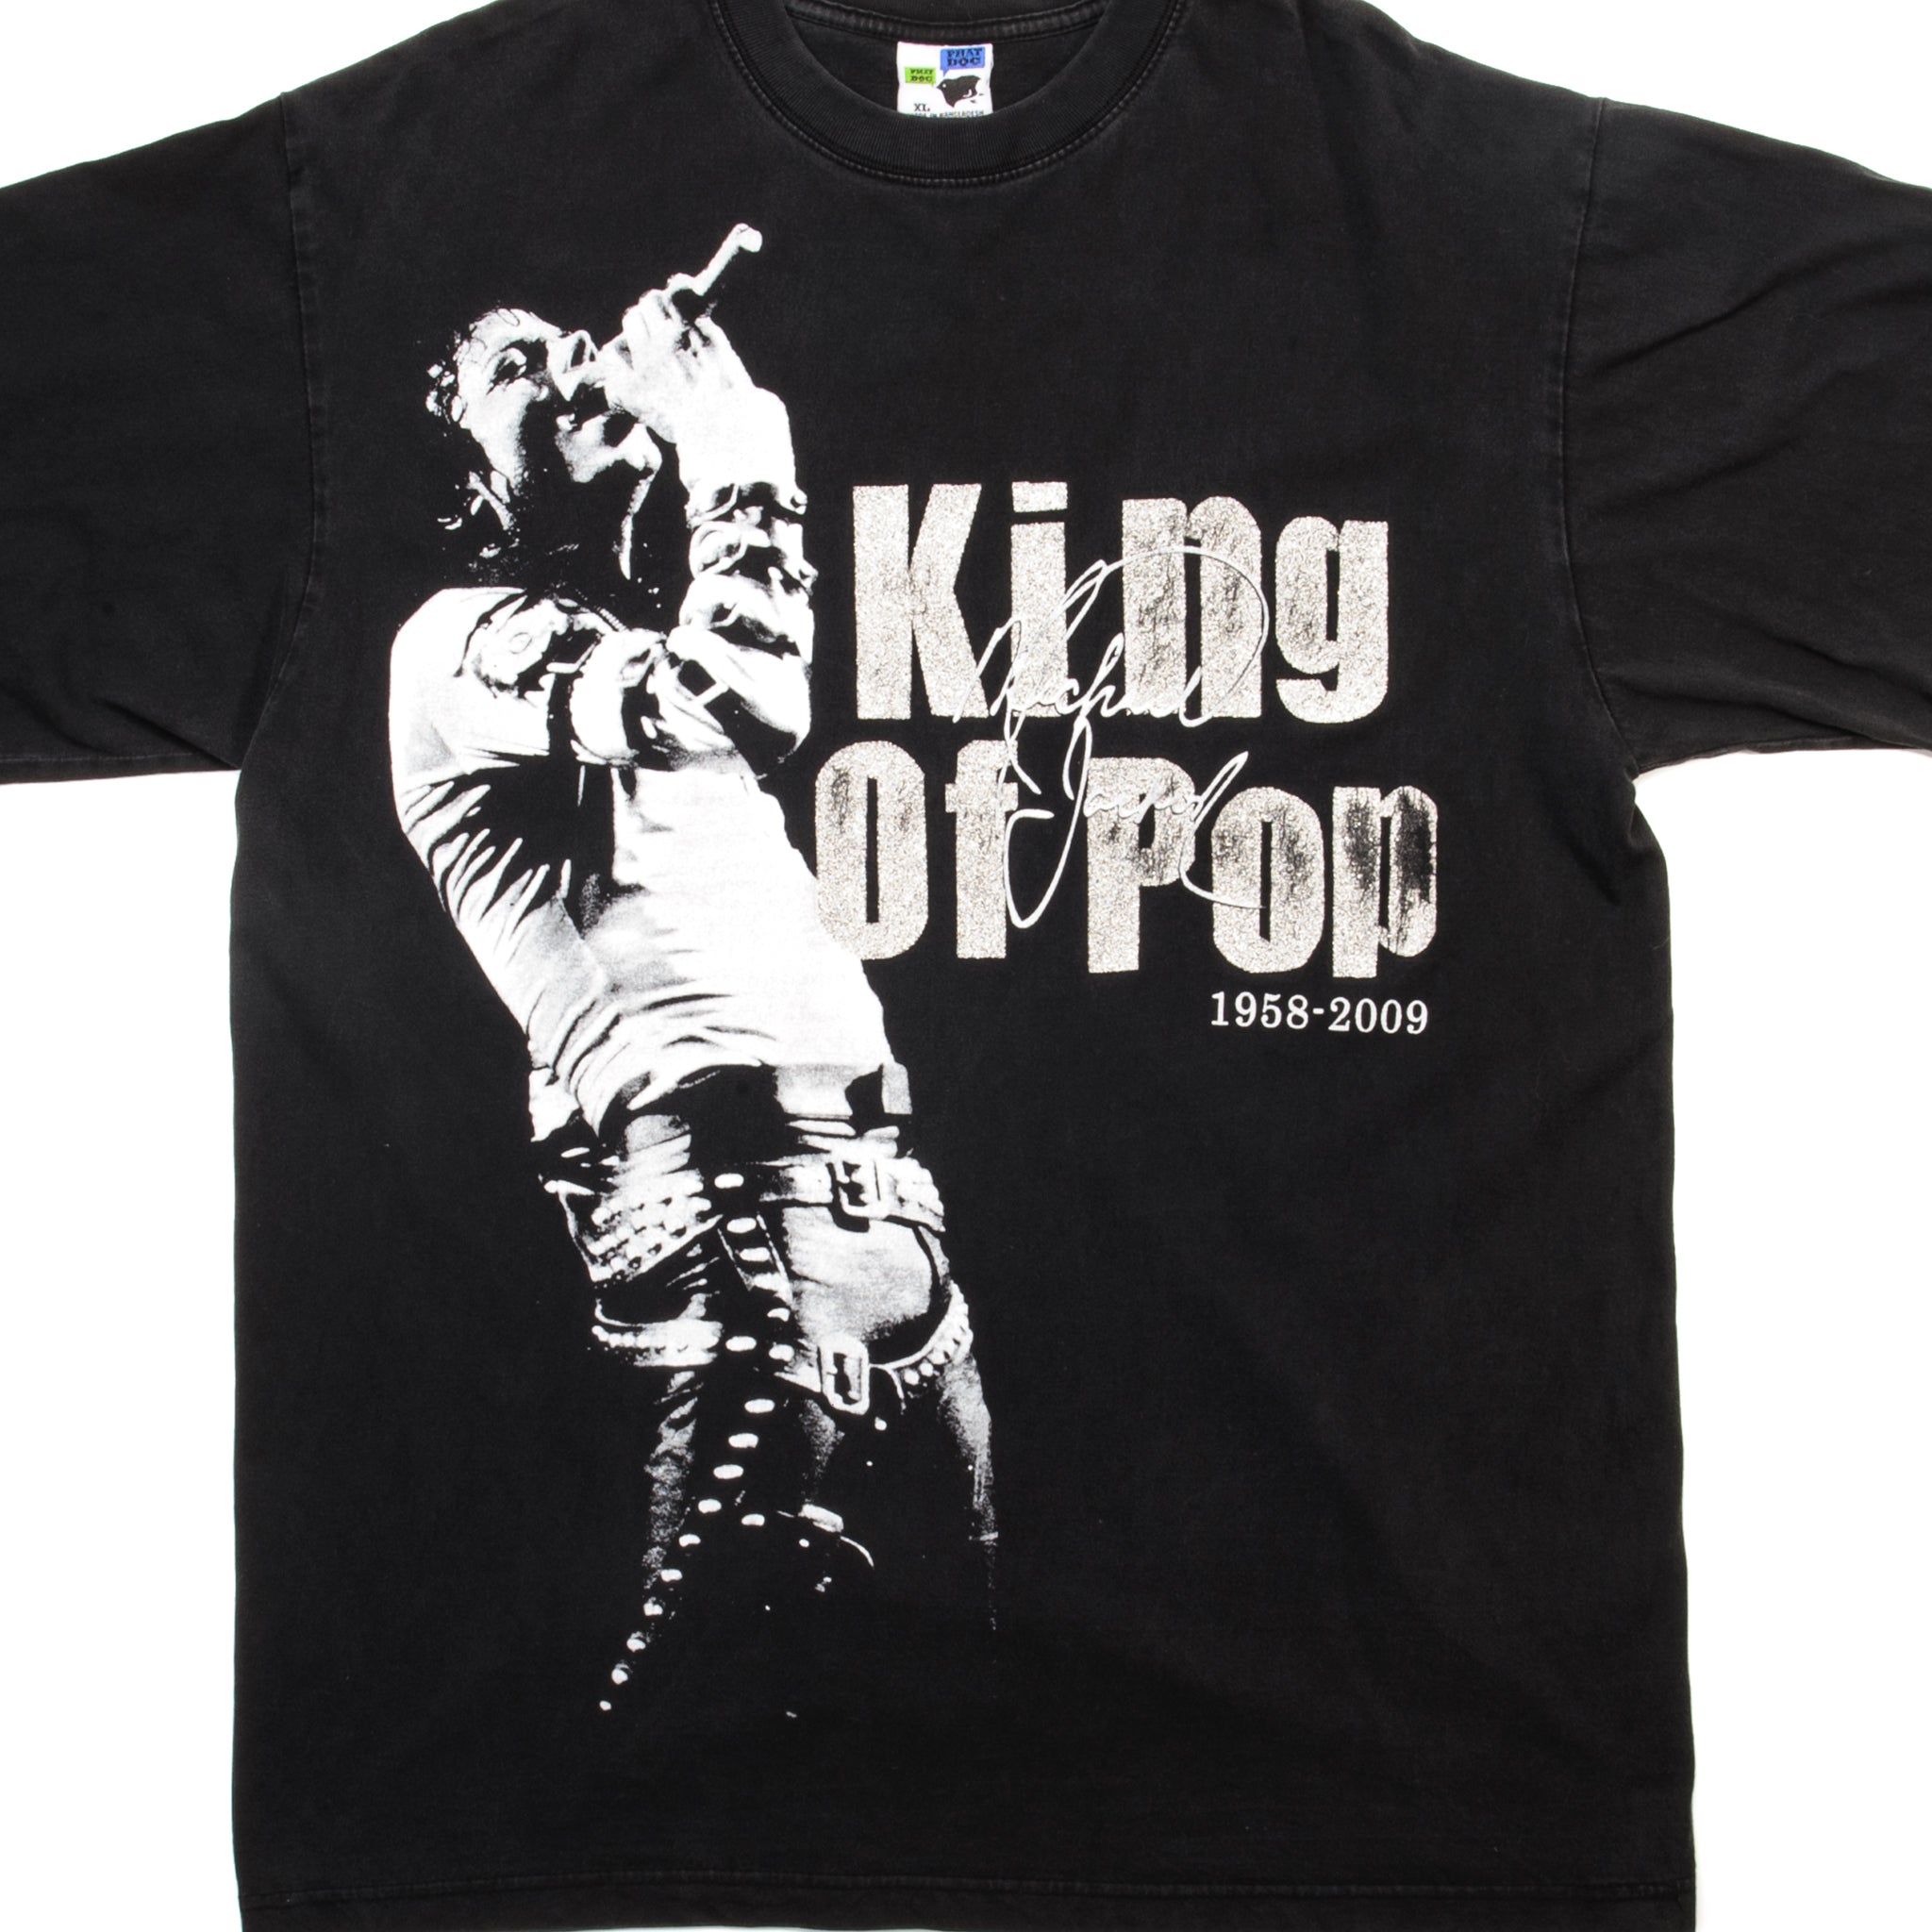 Michael Jackson t-shirt size L